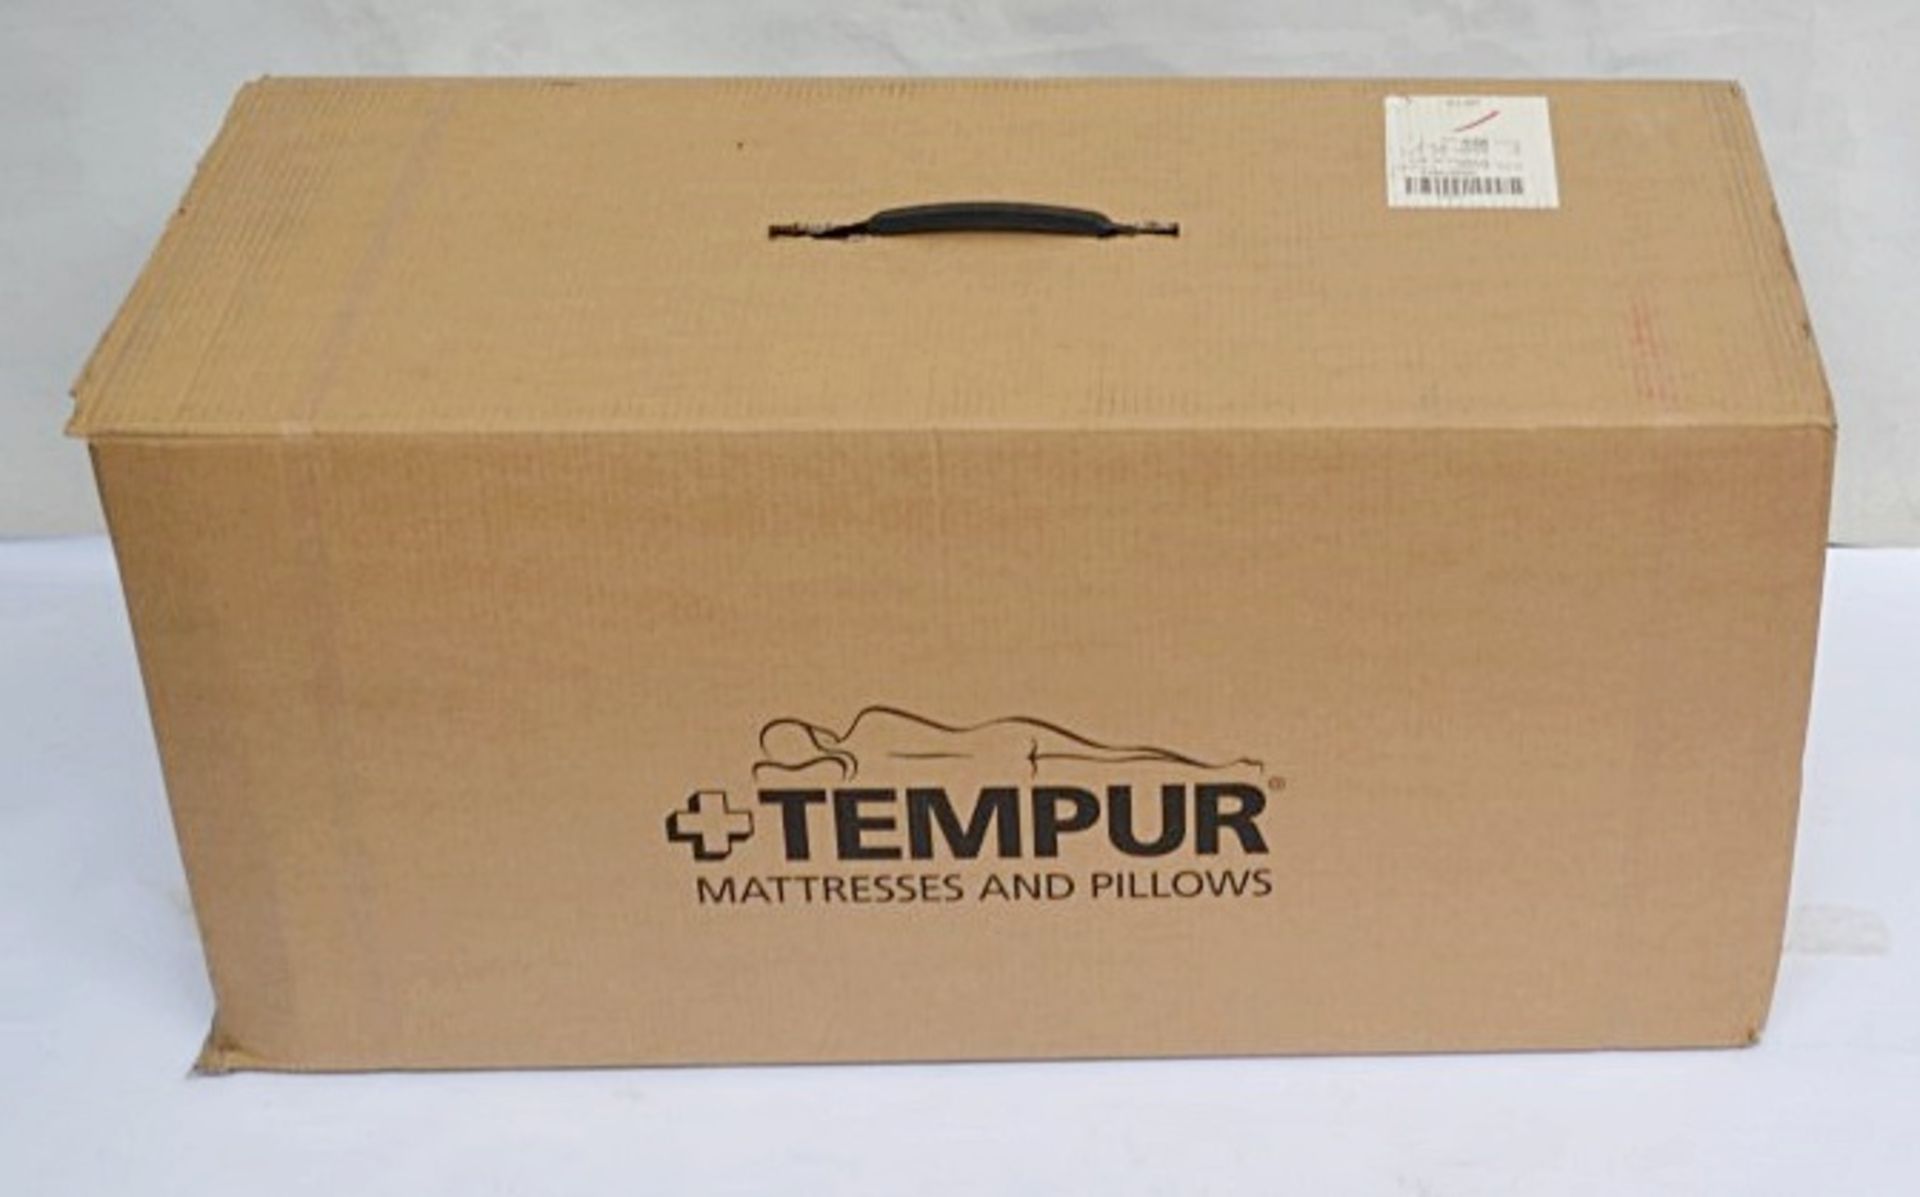 1 x Tempur 3ft Single Mattress Topper - Boxed - Dimensions: 90x190x7cm - Ref: 3862820A - CL087 - - Image 3 of 4